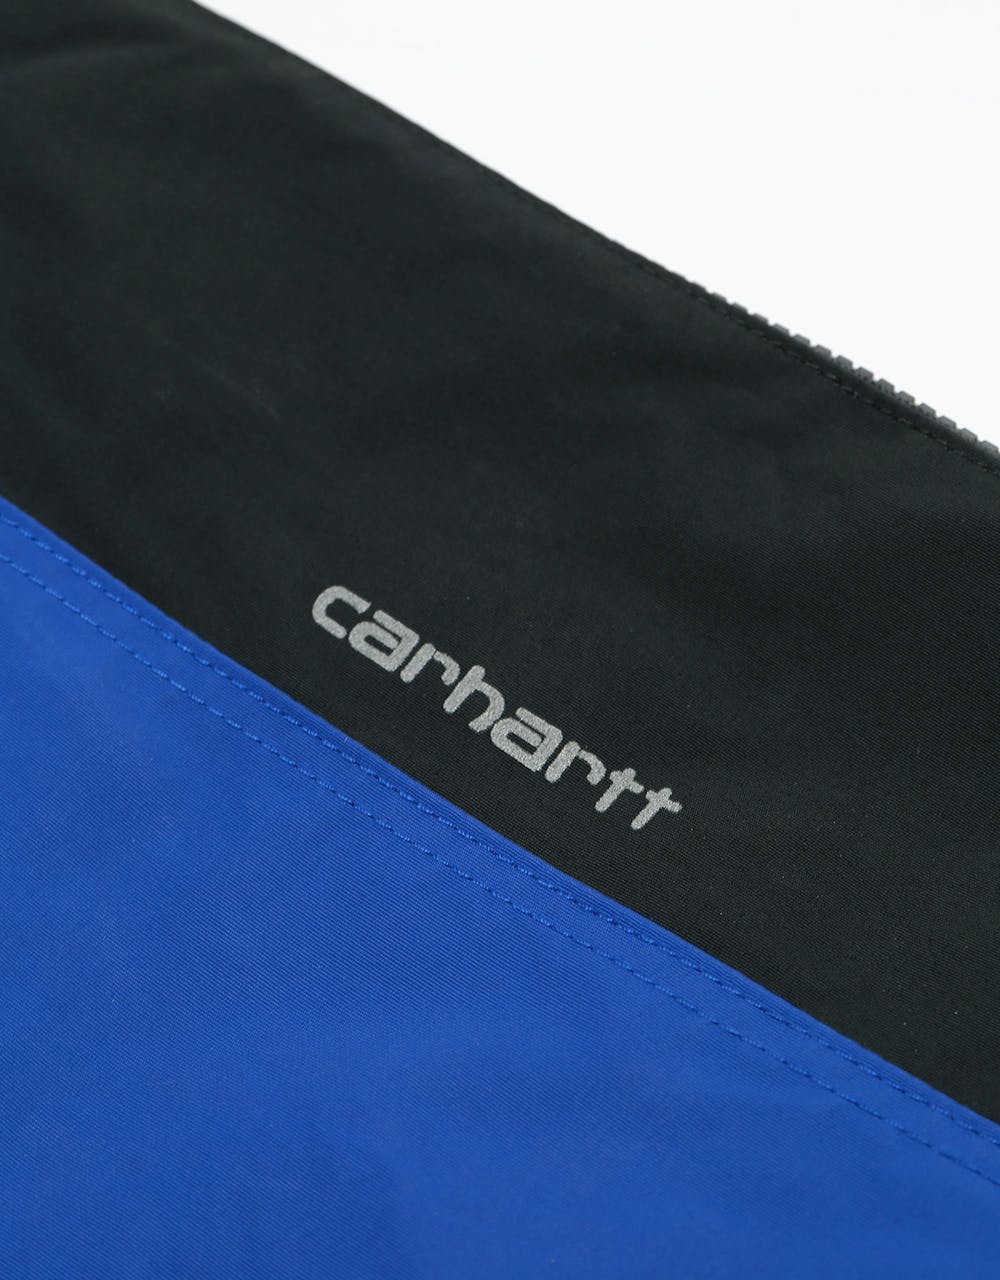 Carhartt WIP Dexter Cross Body Bag - Black/Thunder Blue